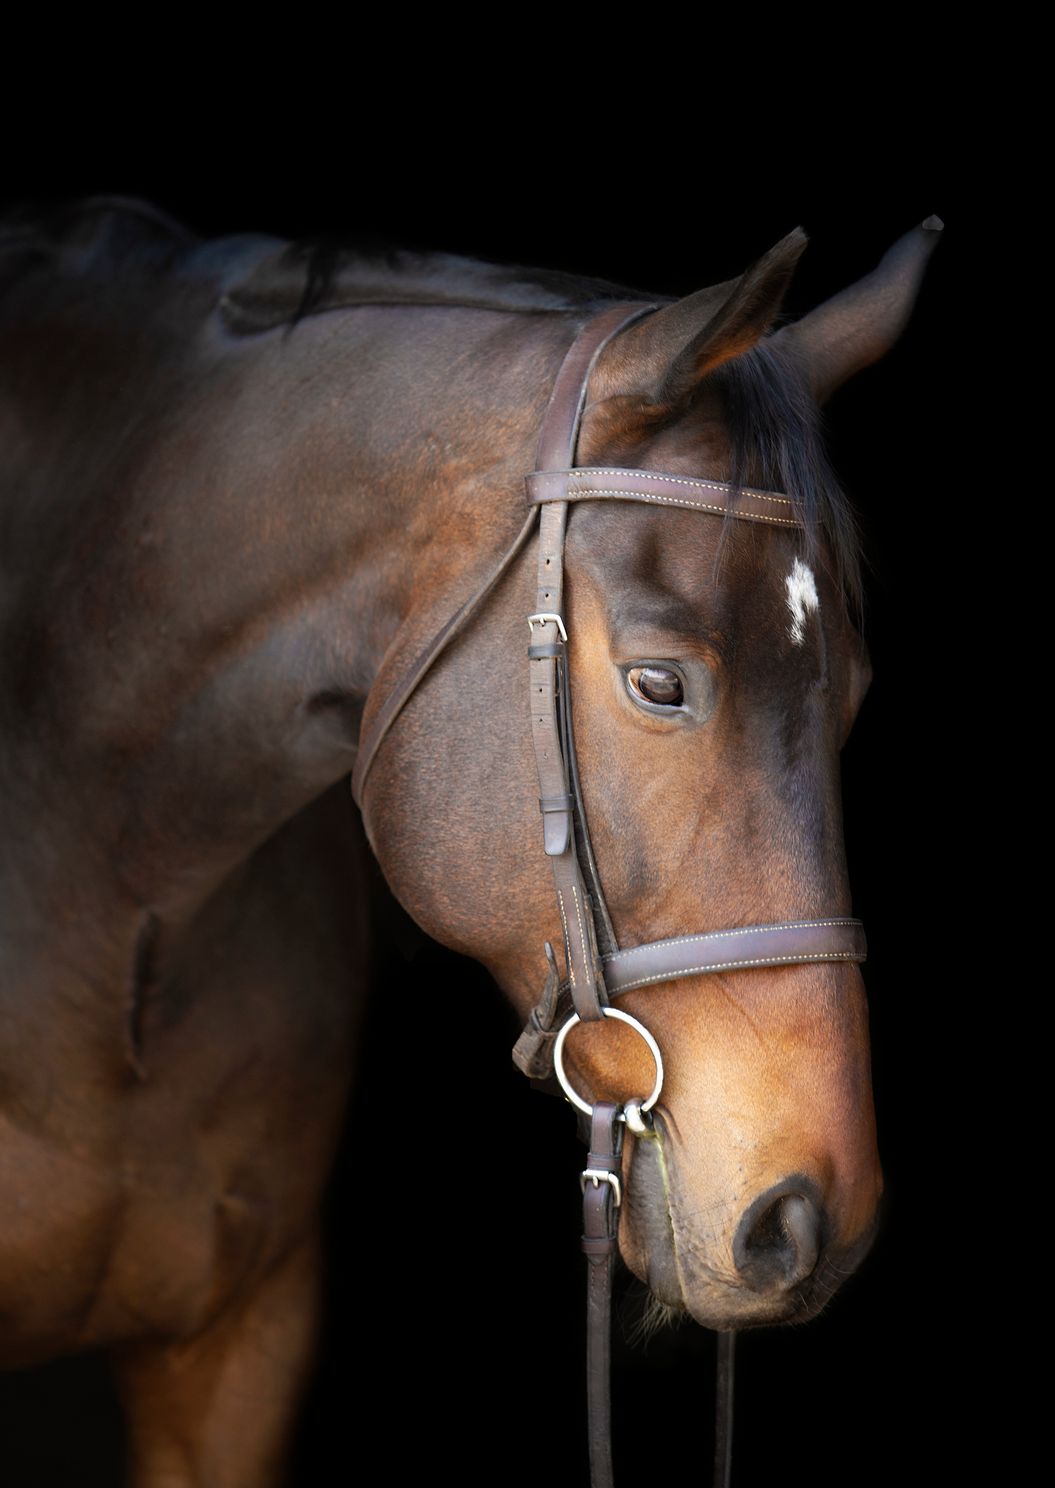 thoroughbred-horse-and-black-background.jpg 1